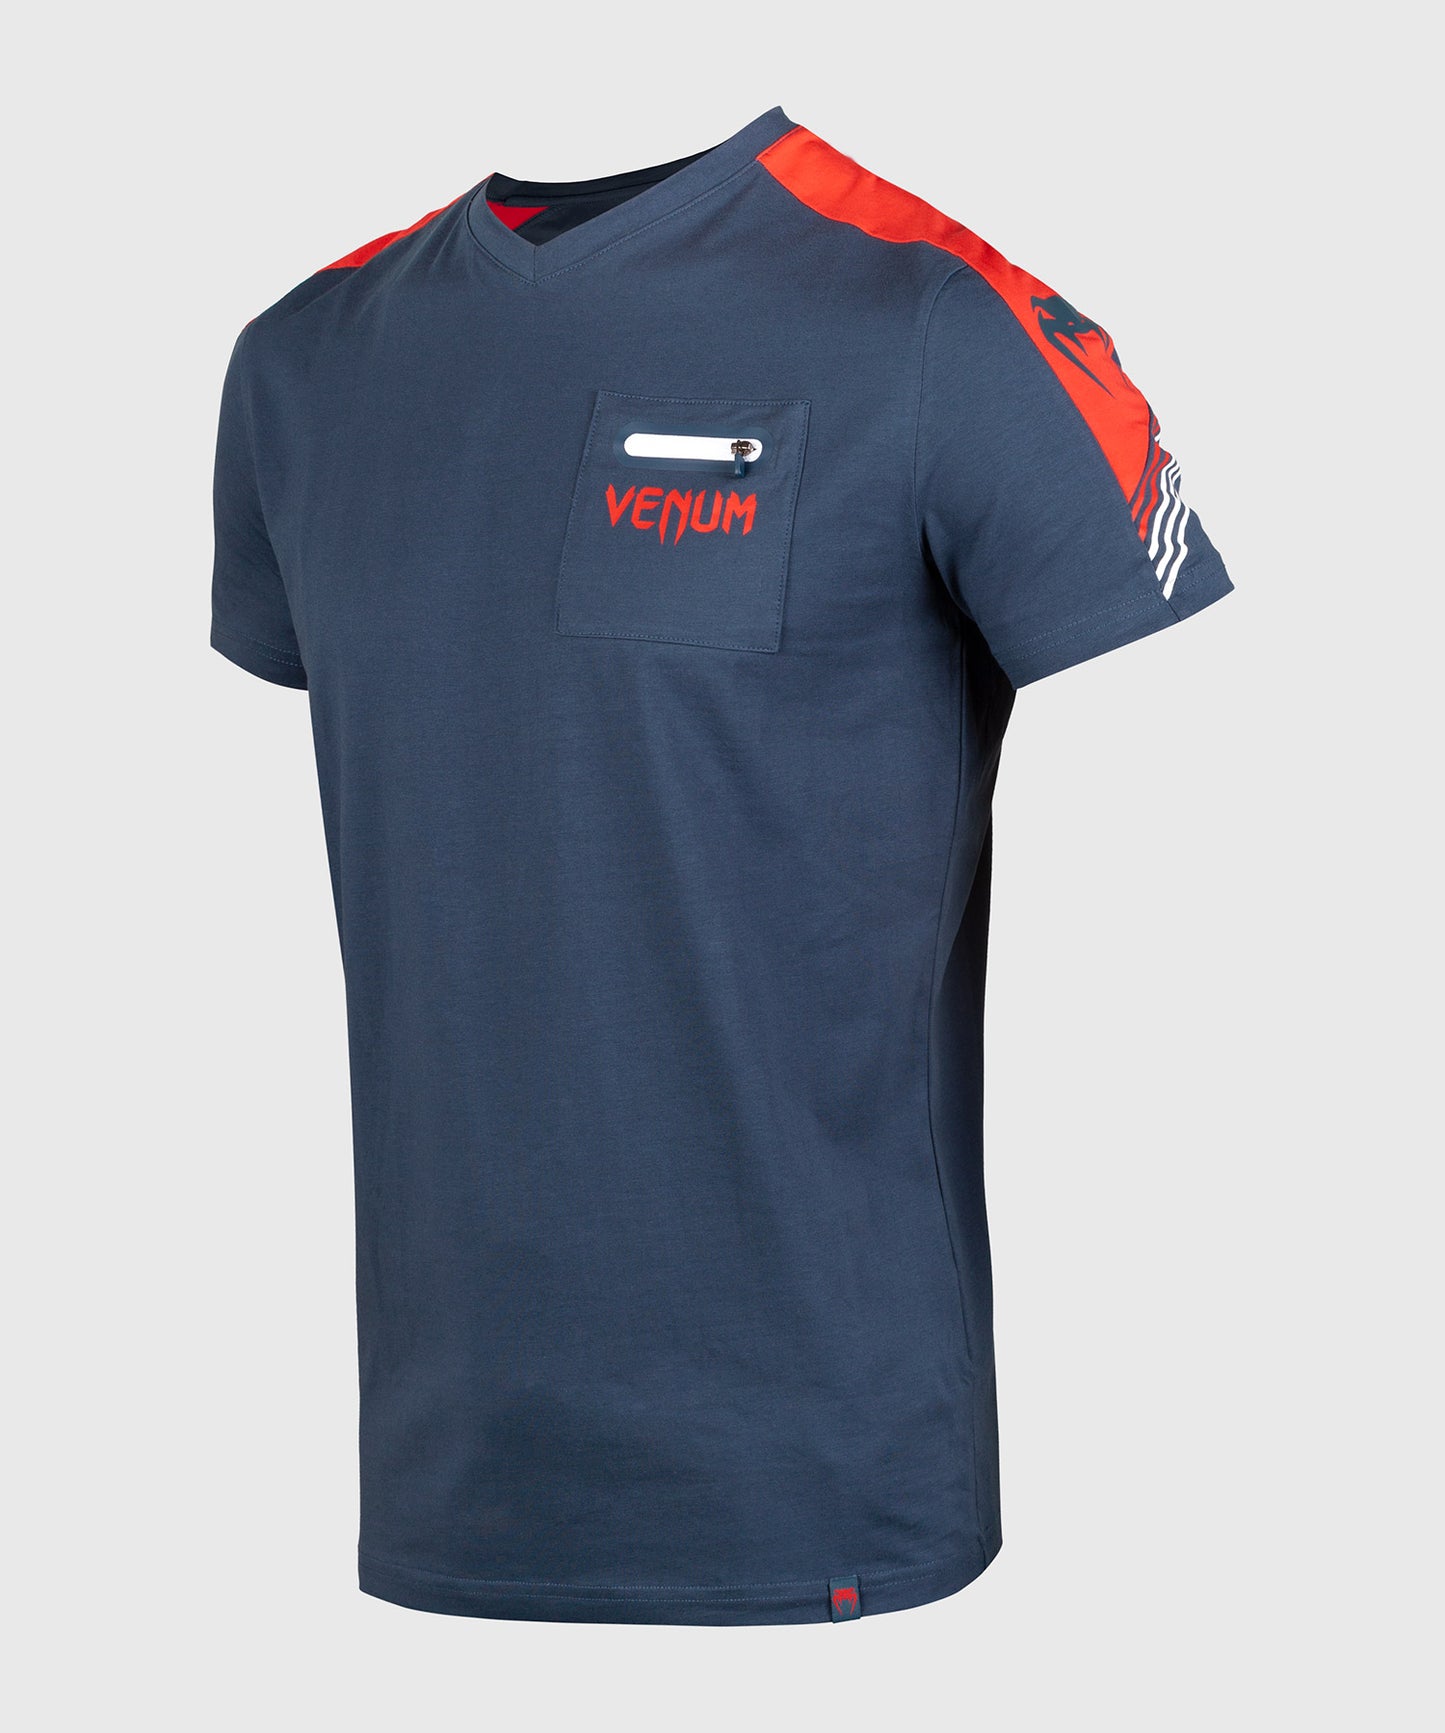 Venum Cargo T-shirt - donkerblauw_rozerood_wit